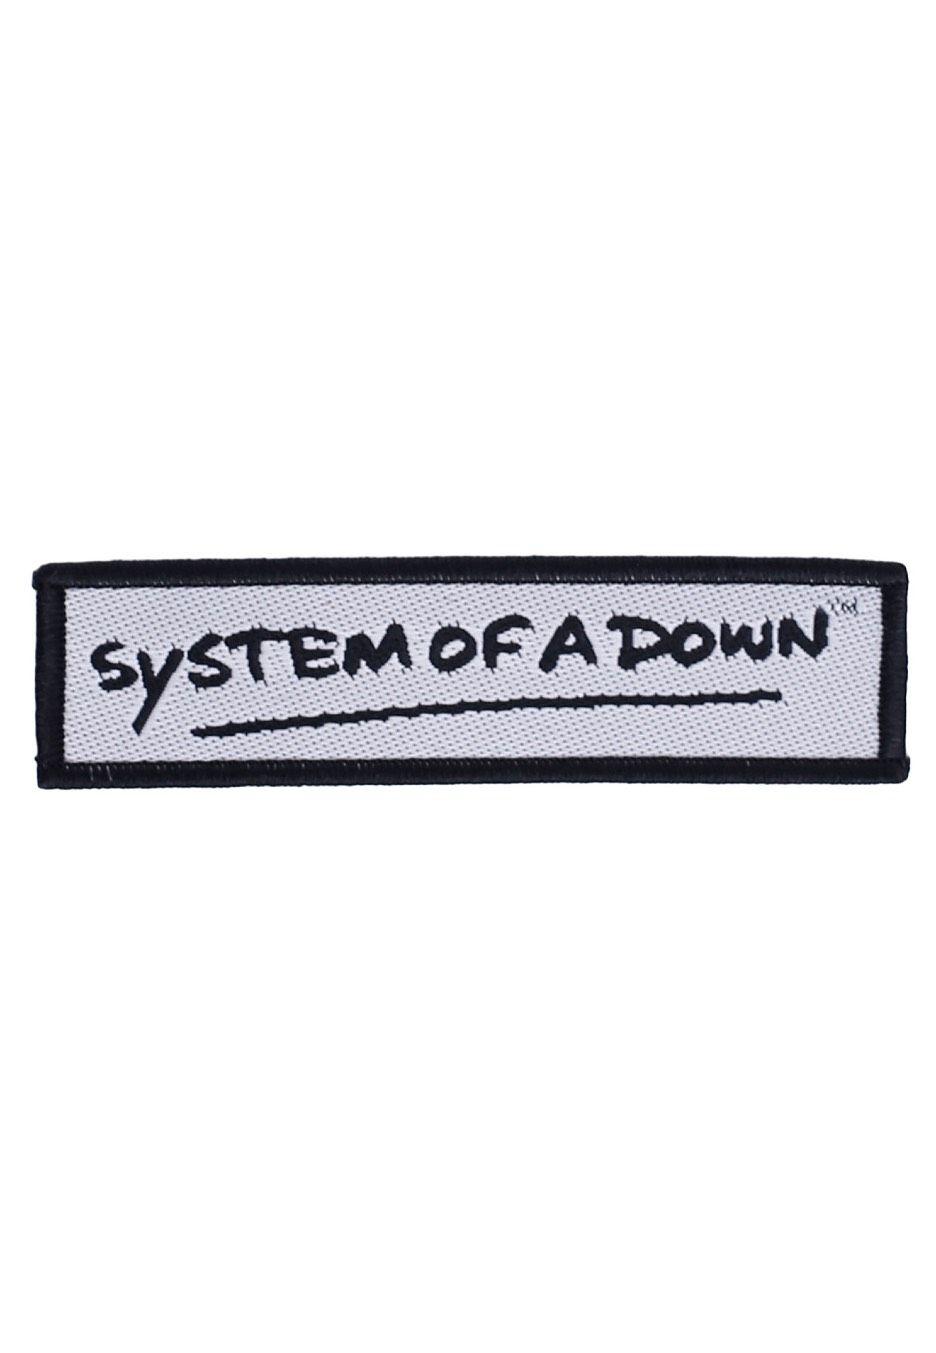 System of a Down Logo - System Of A Down - Logo White - Patch - Official Screamo Merchandise ...